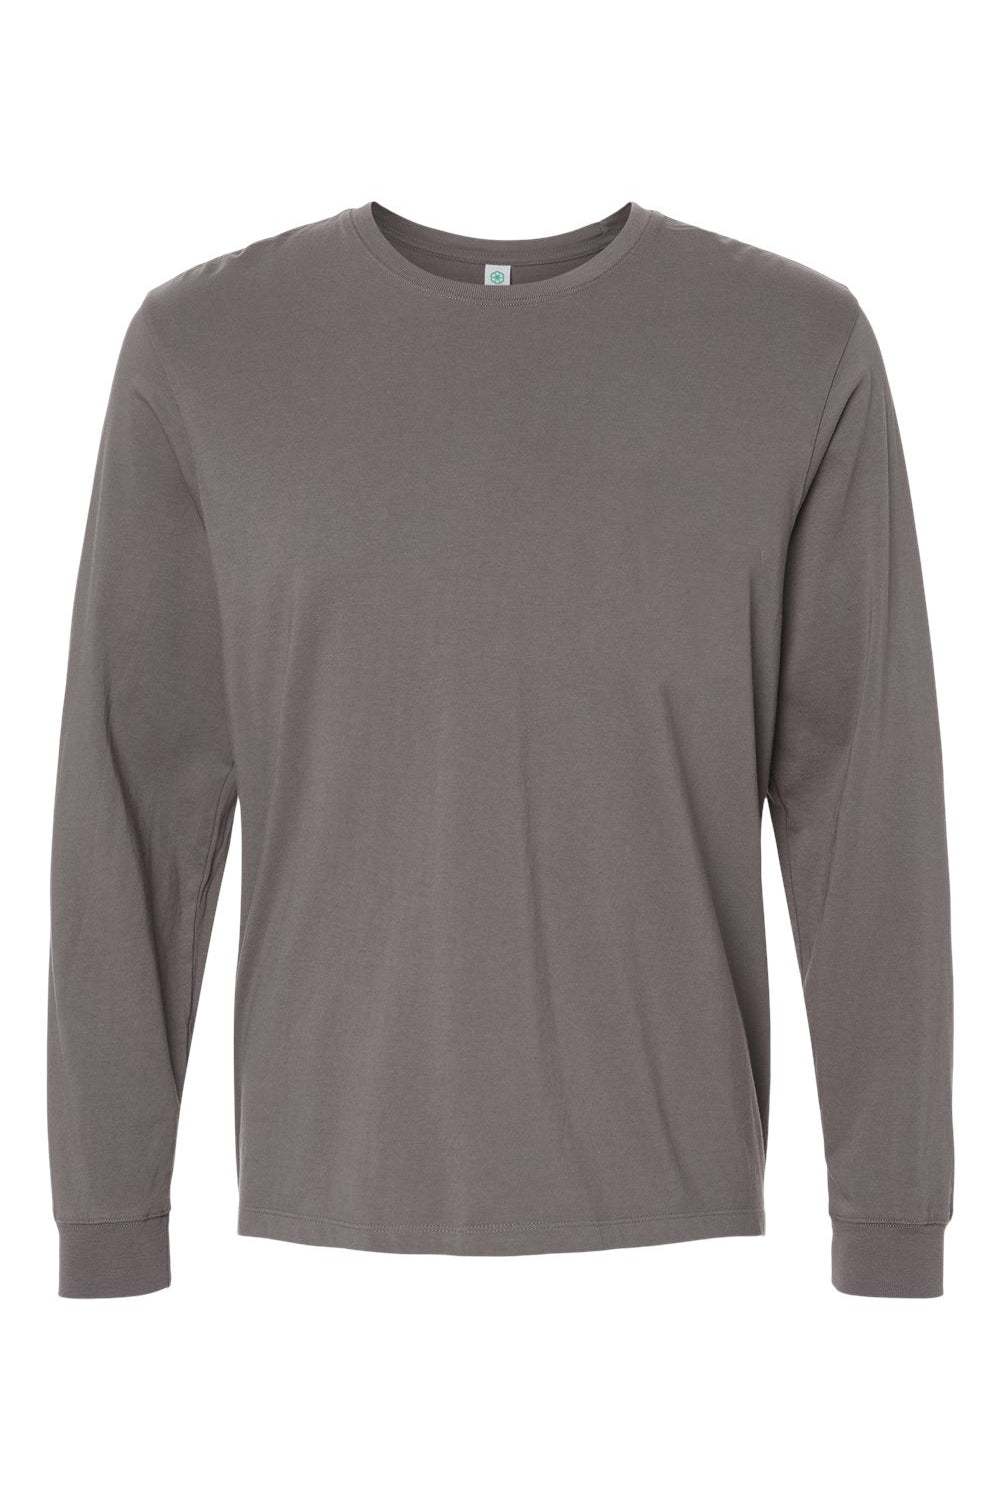 SoftShirts 420 Mens Organic Long Sleeve Crewneck T-Shirt Graphite Grey Flat Front